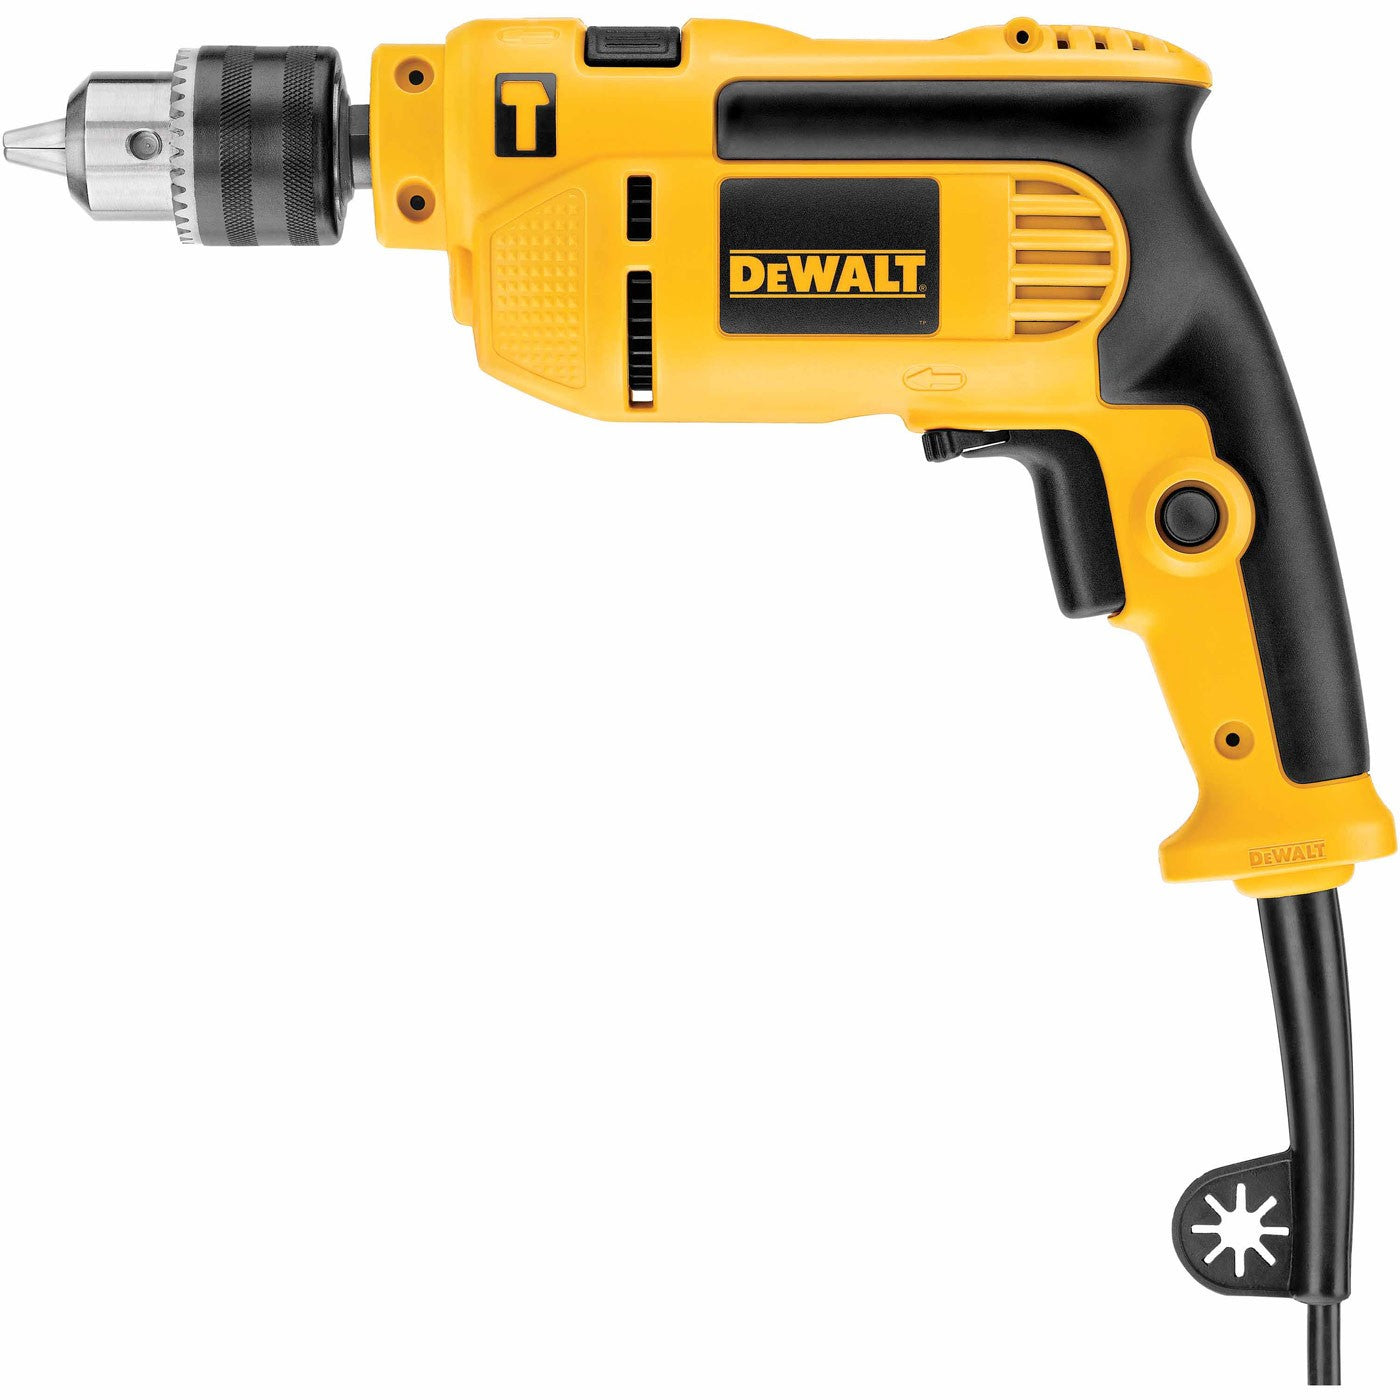 DeWalt DWE5010 1/2" Single Speed Hammer Drill